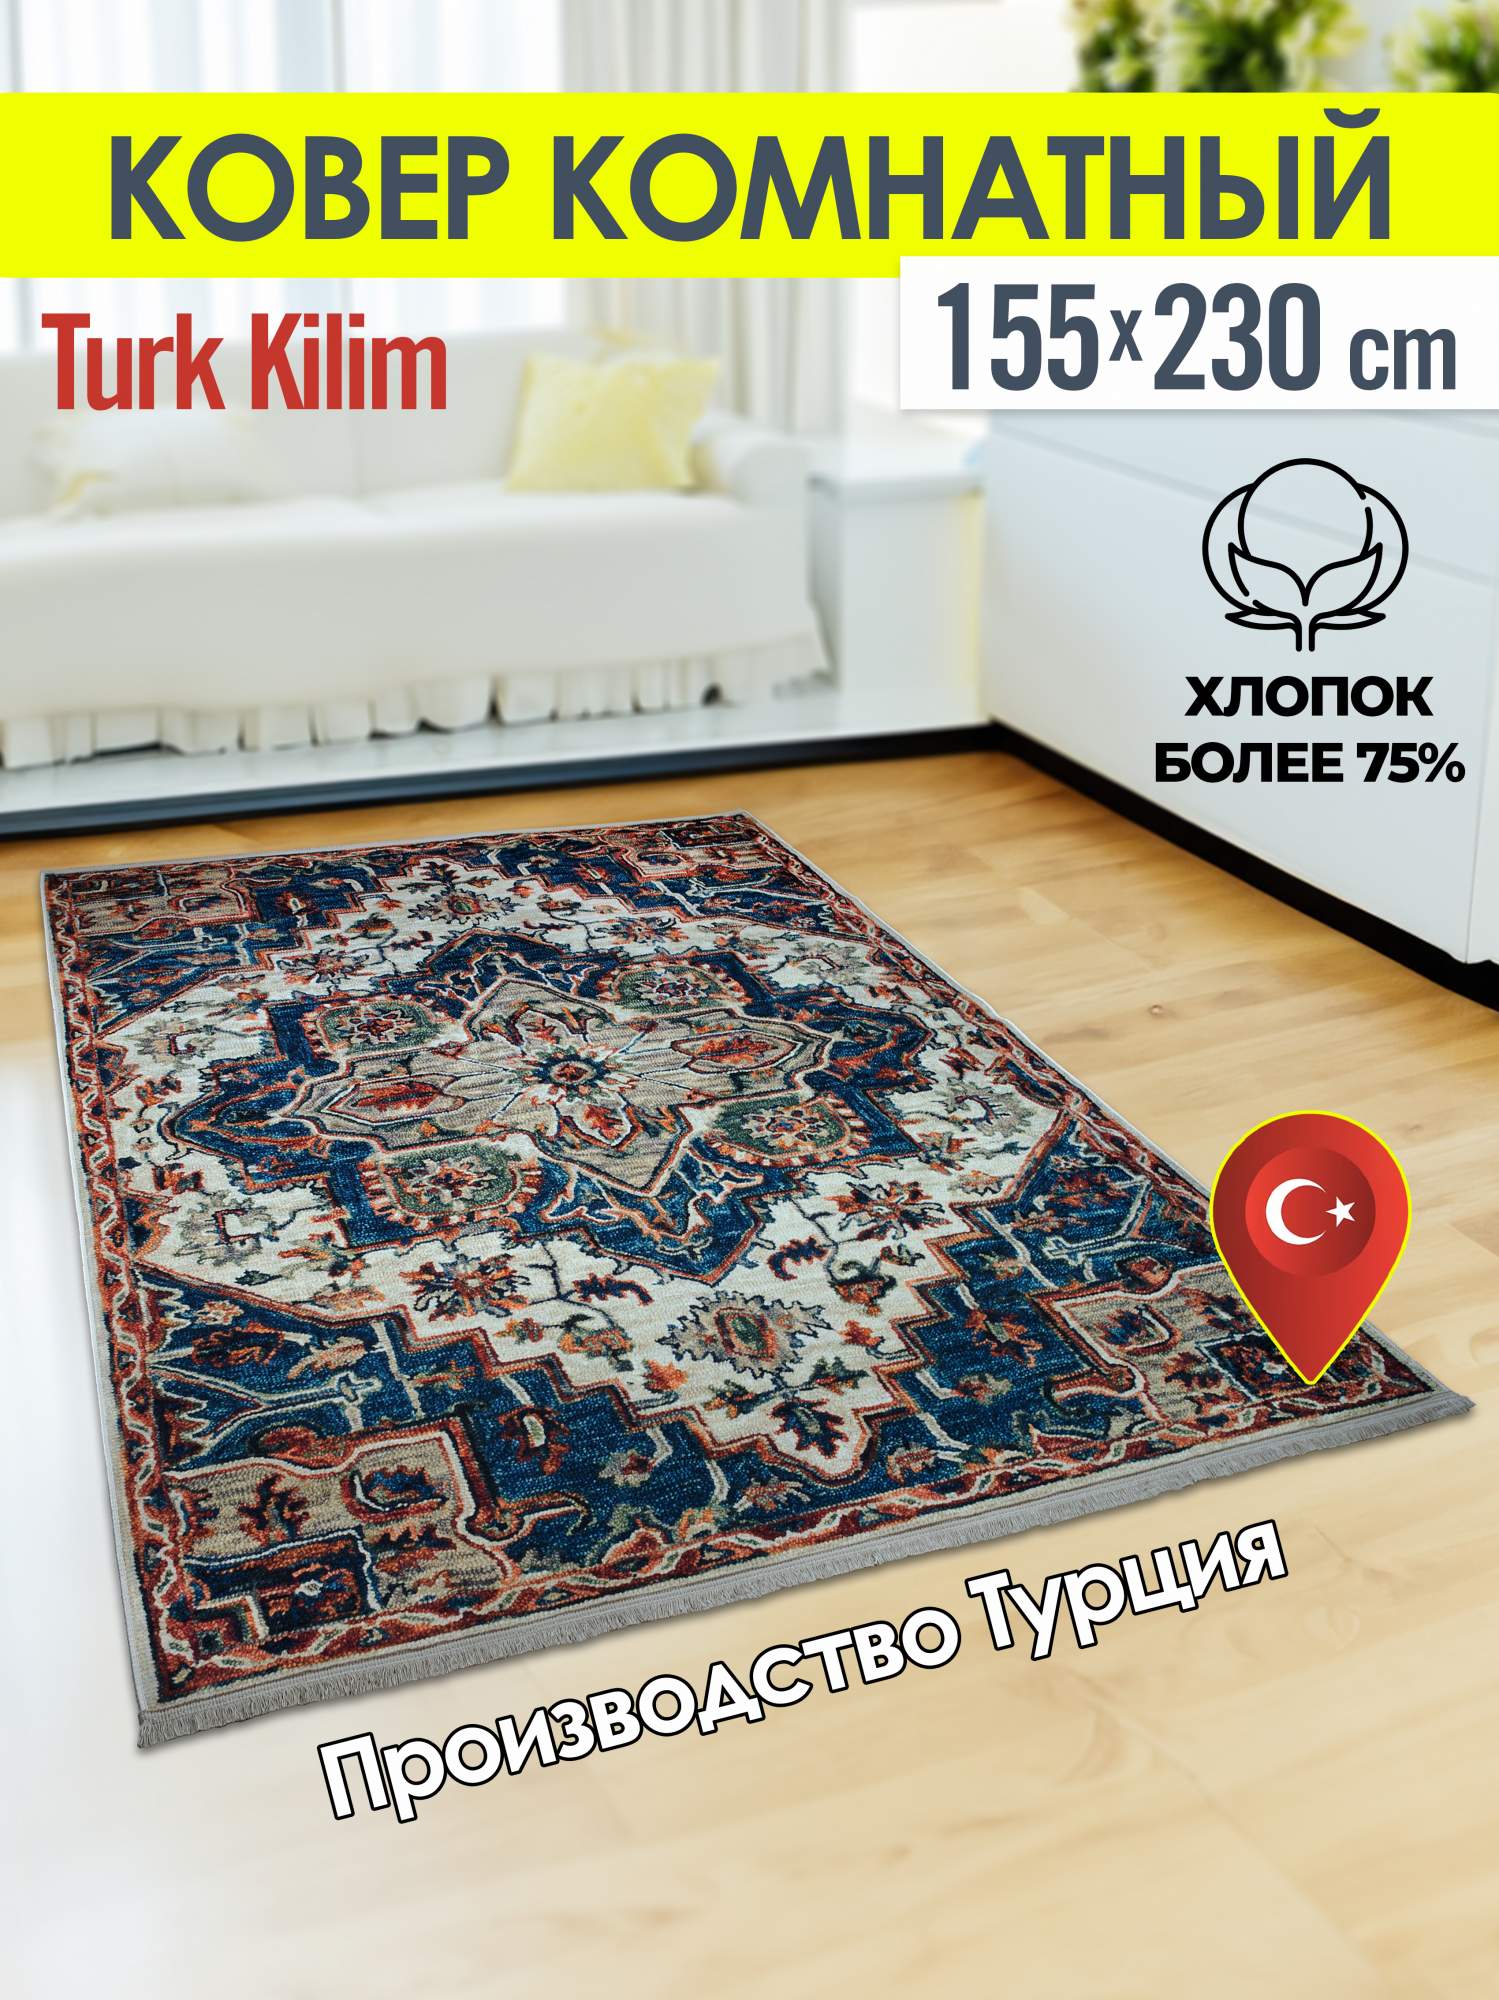 Ковёр турецкий комнатный из хлопка Turk- kilim 155x230 3150A(2)